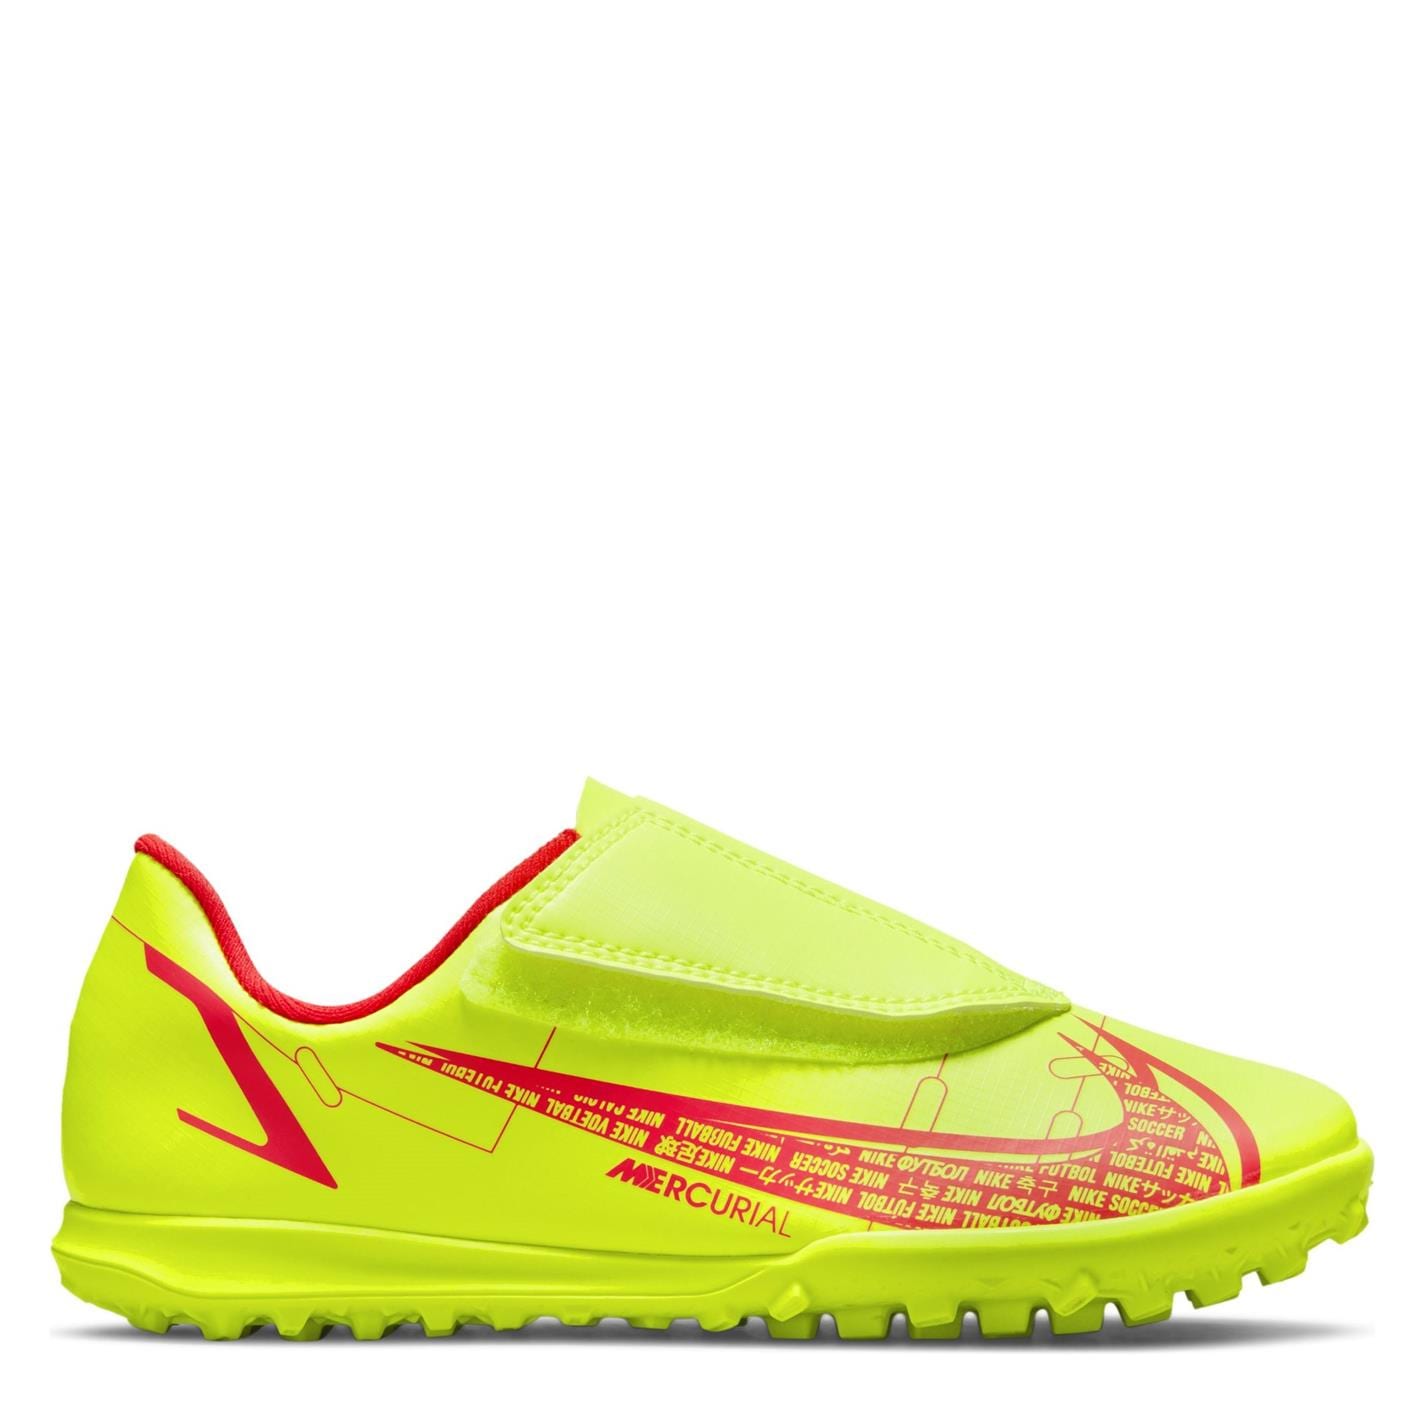 Adidasi Gazon Sintetic Nike Mercurial Vapor Club pentru Copii galben rosu inchis